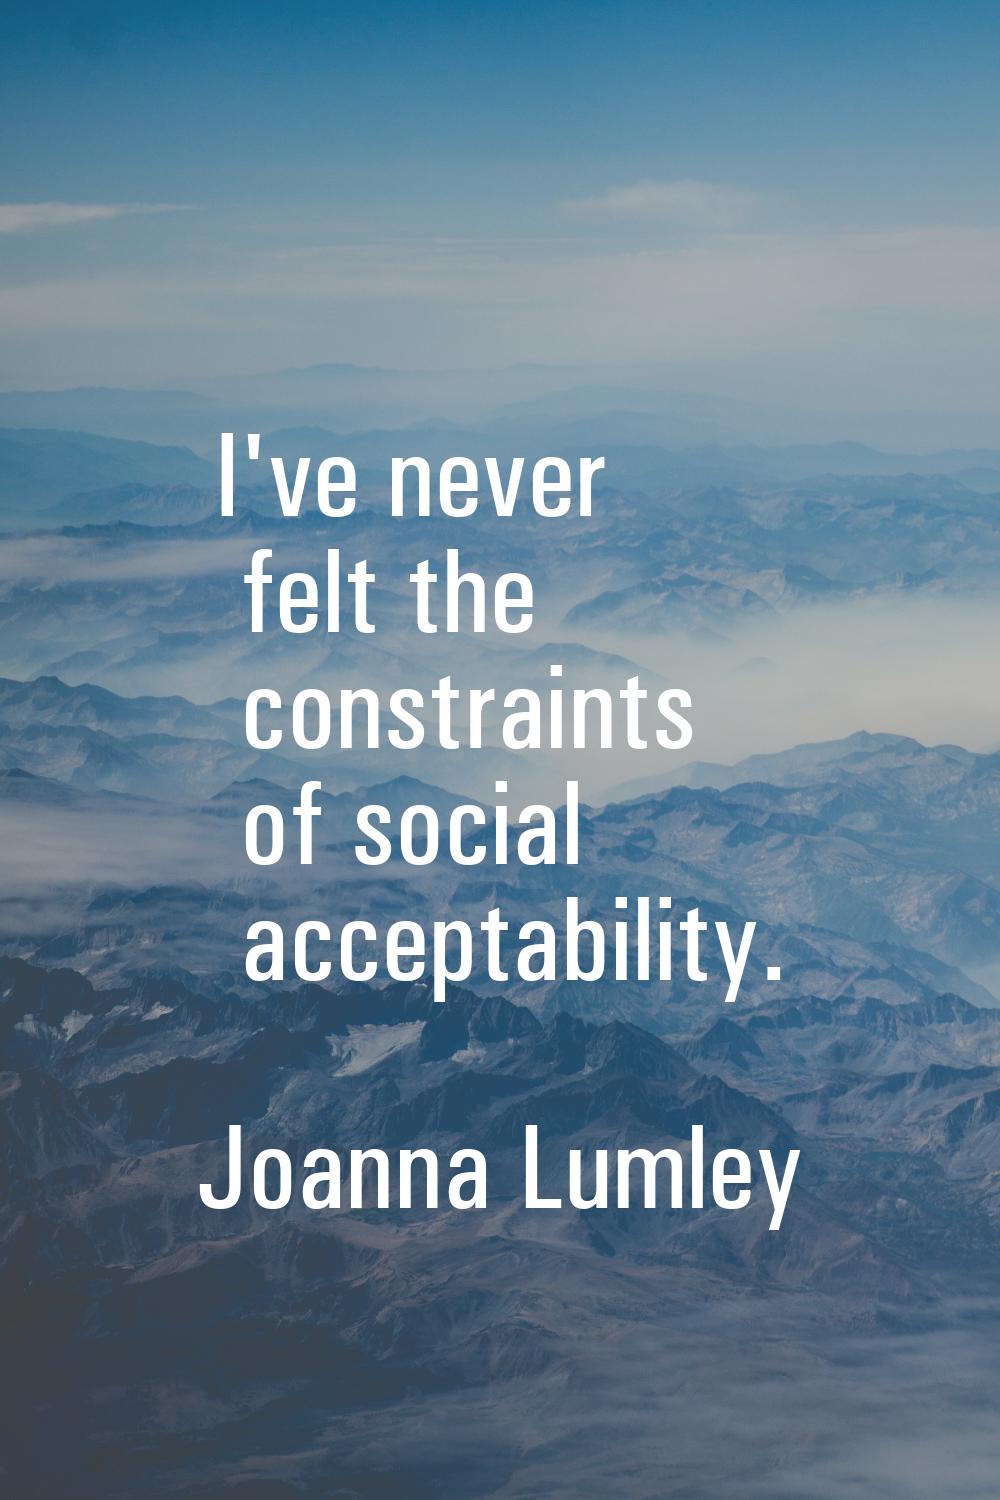 I've never felt the constraints of social acceptability.